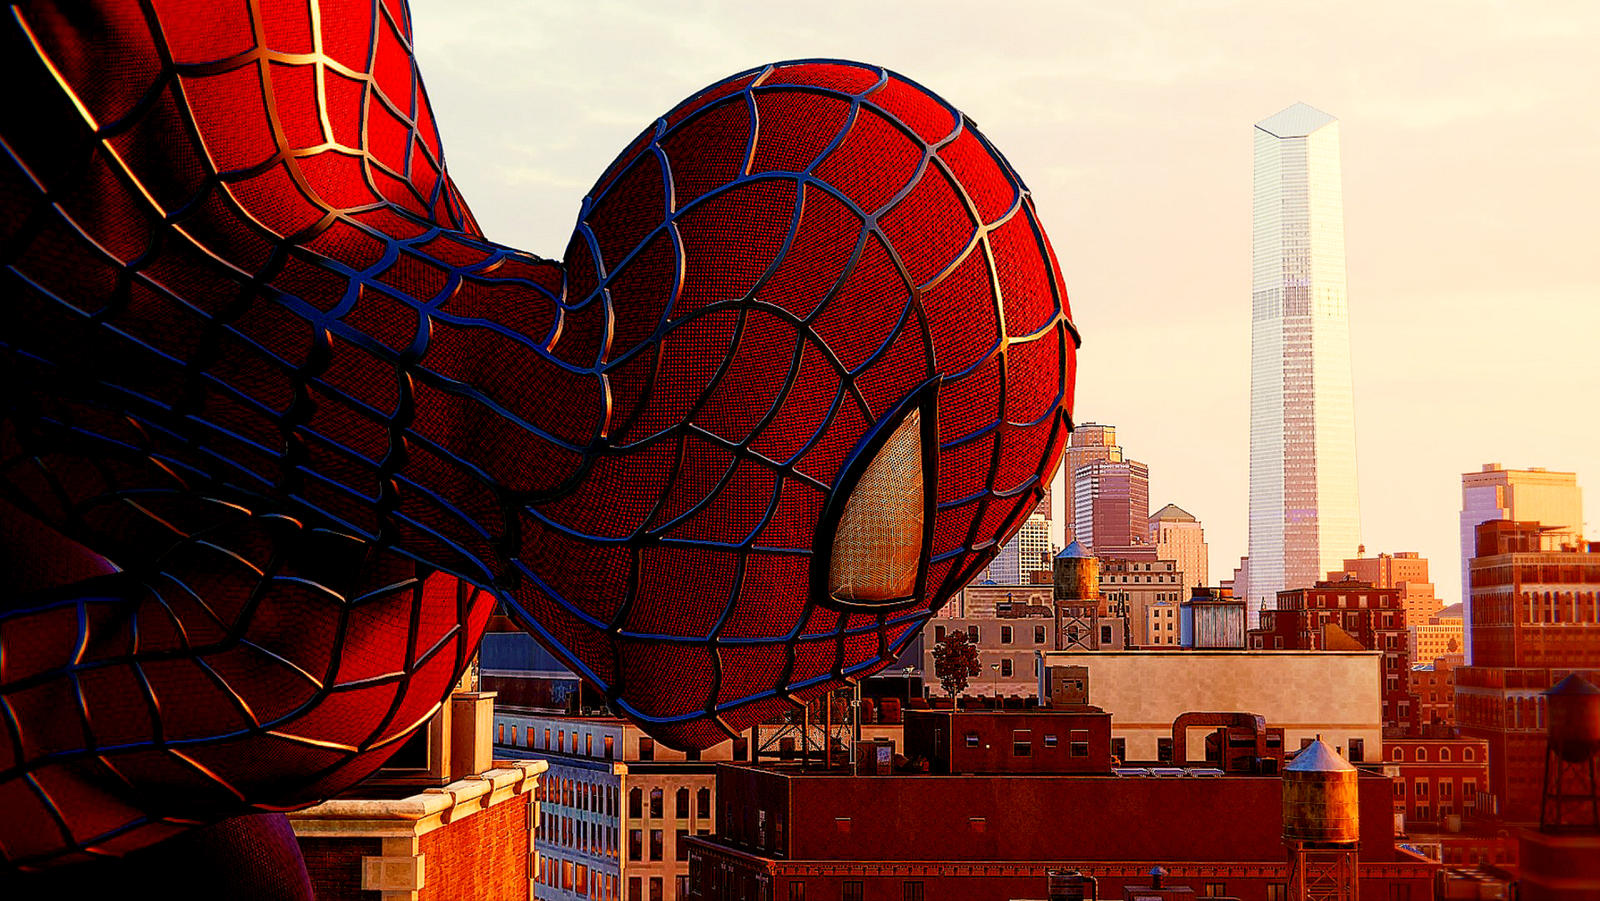 Peter Parker Spider-Man Remastered Wallpapers